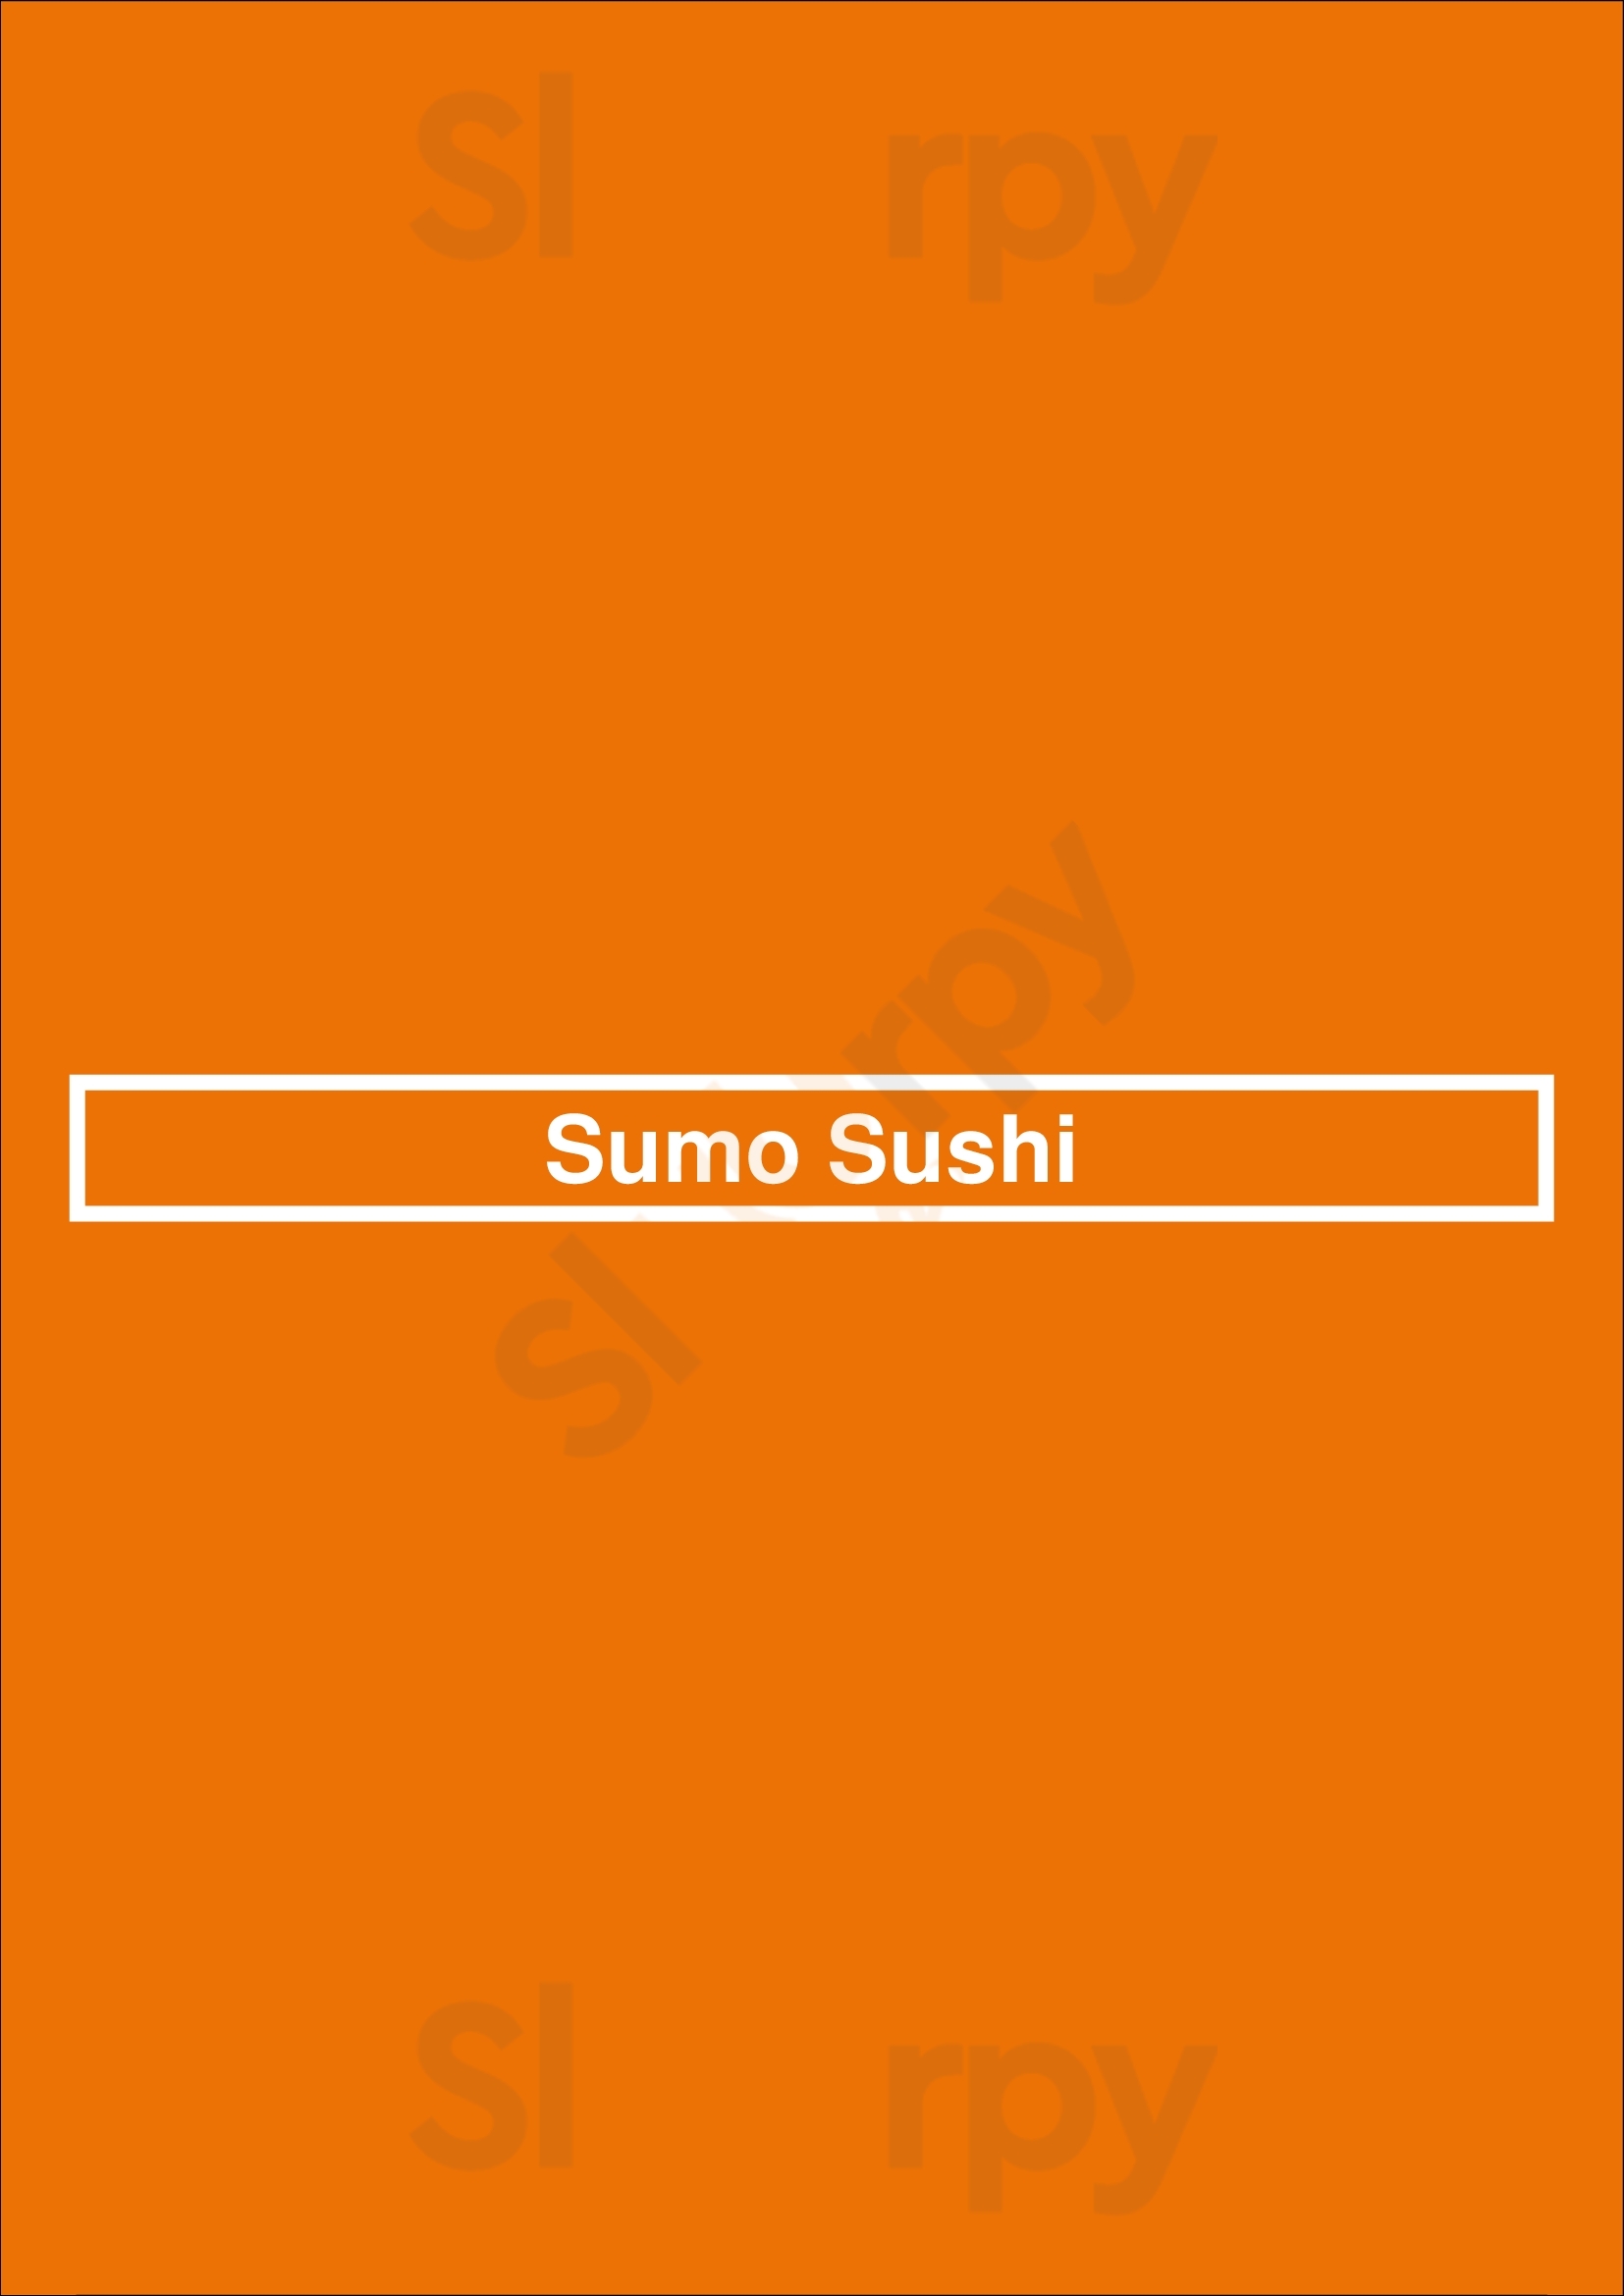 Sumo Sushi Newark Menu - 1